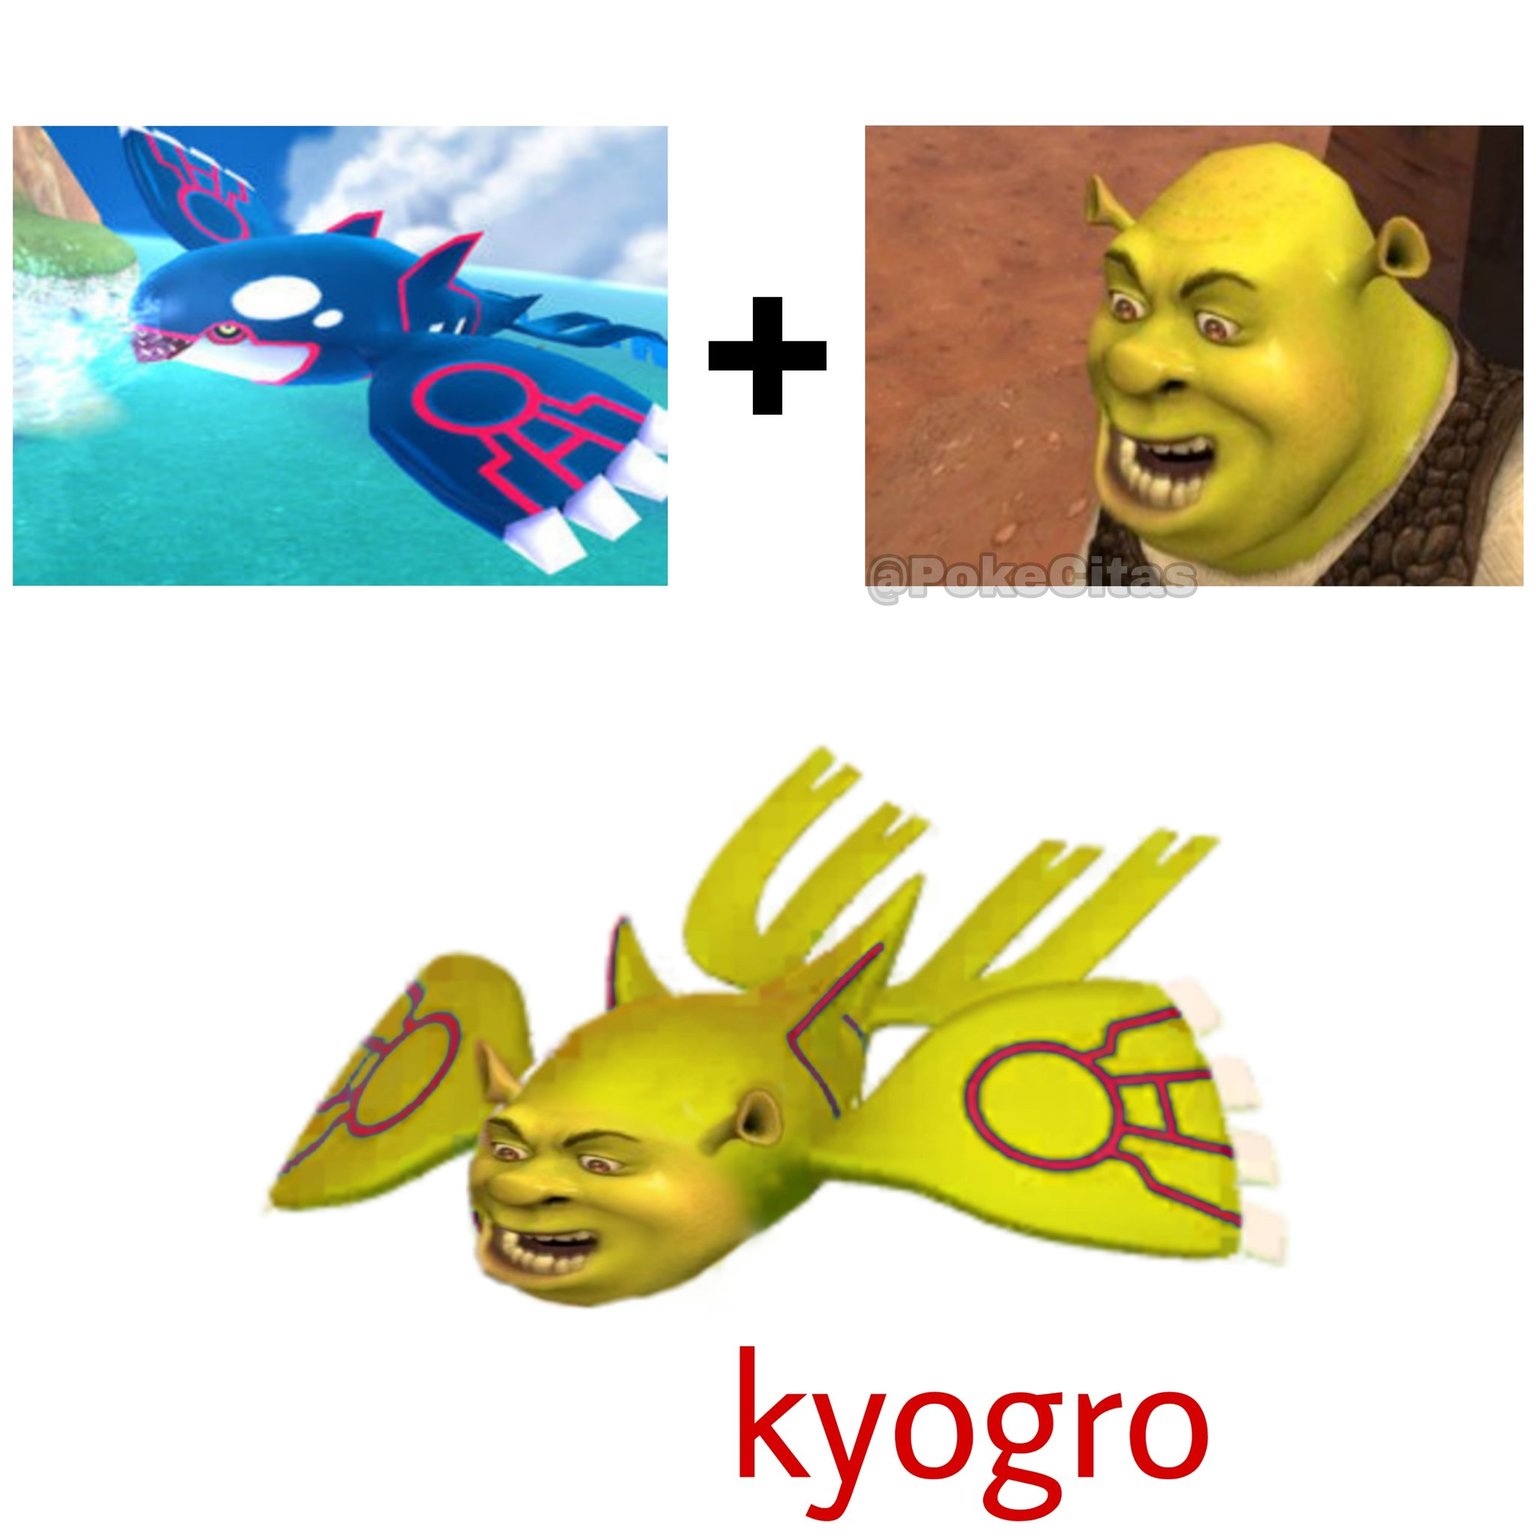 Kyogro - meme